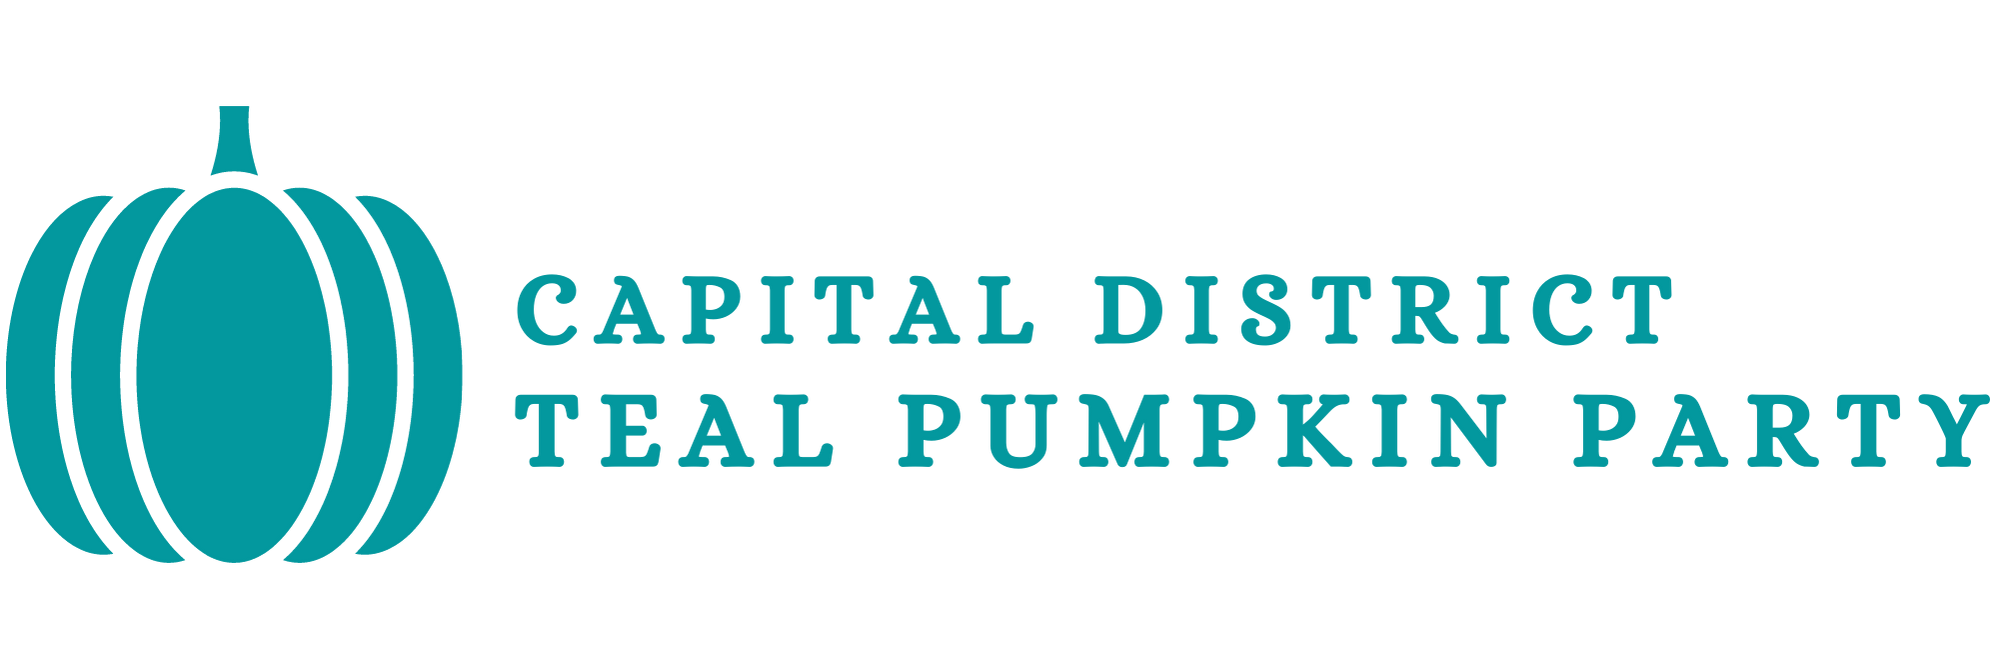 Capital District Teal Pumpkin Party Logo